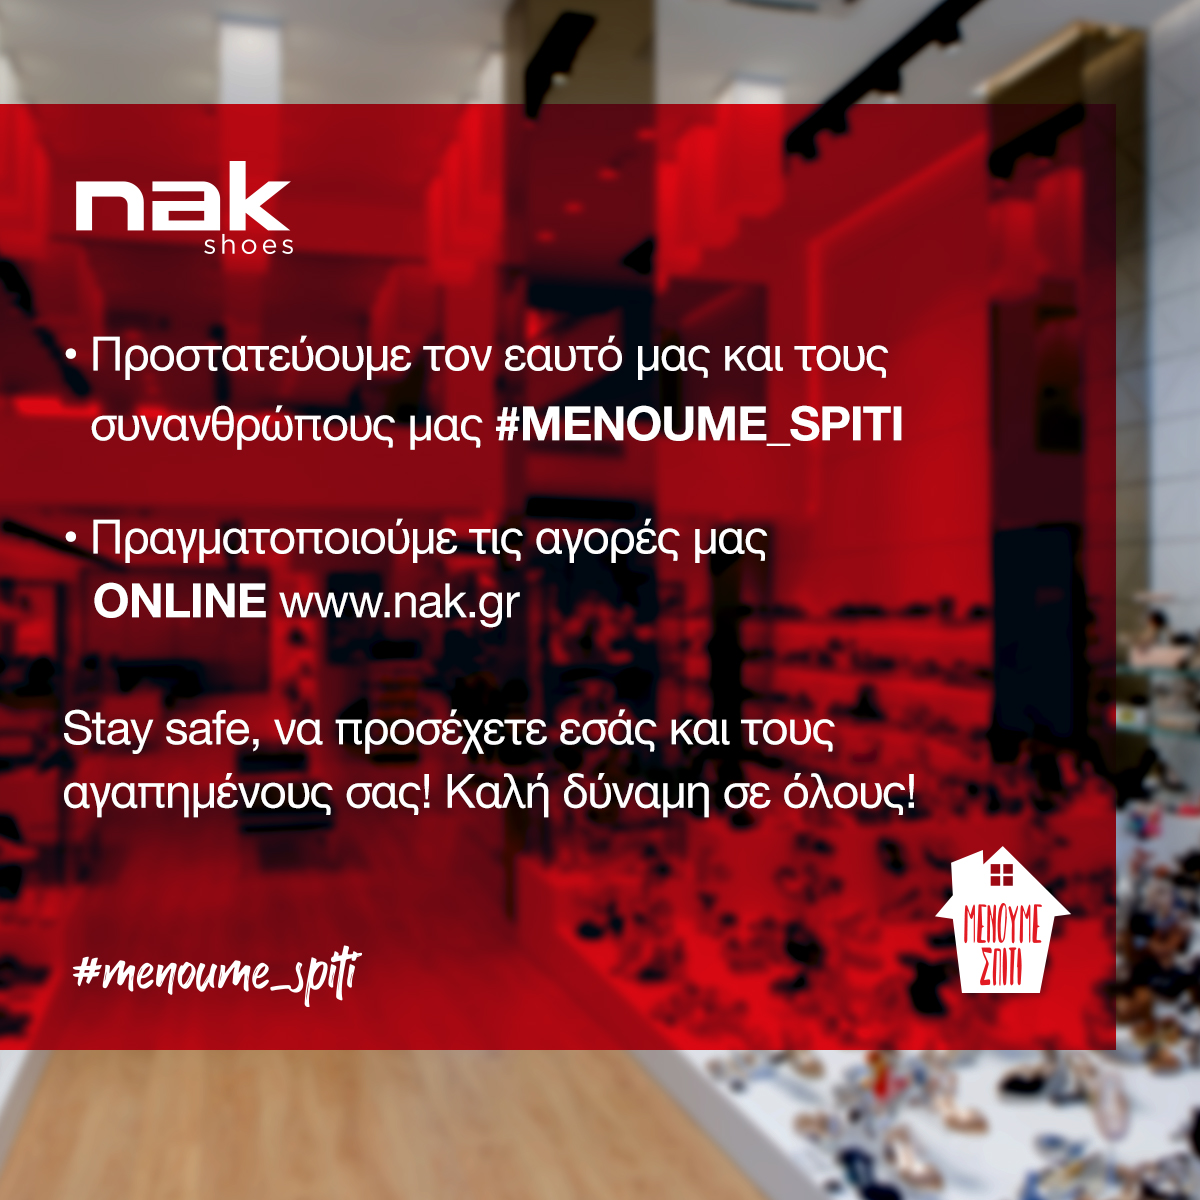 #MENOUMESPITI και παραγγέλνουμε online τη νέα συλλογή Nak Shoes